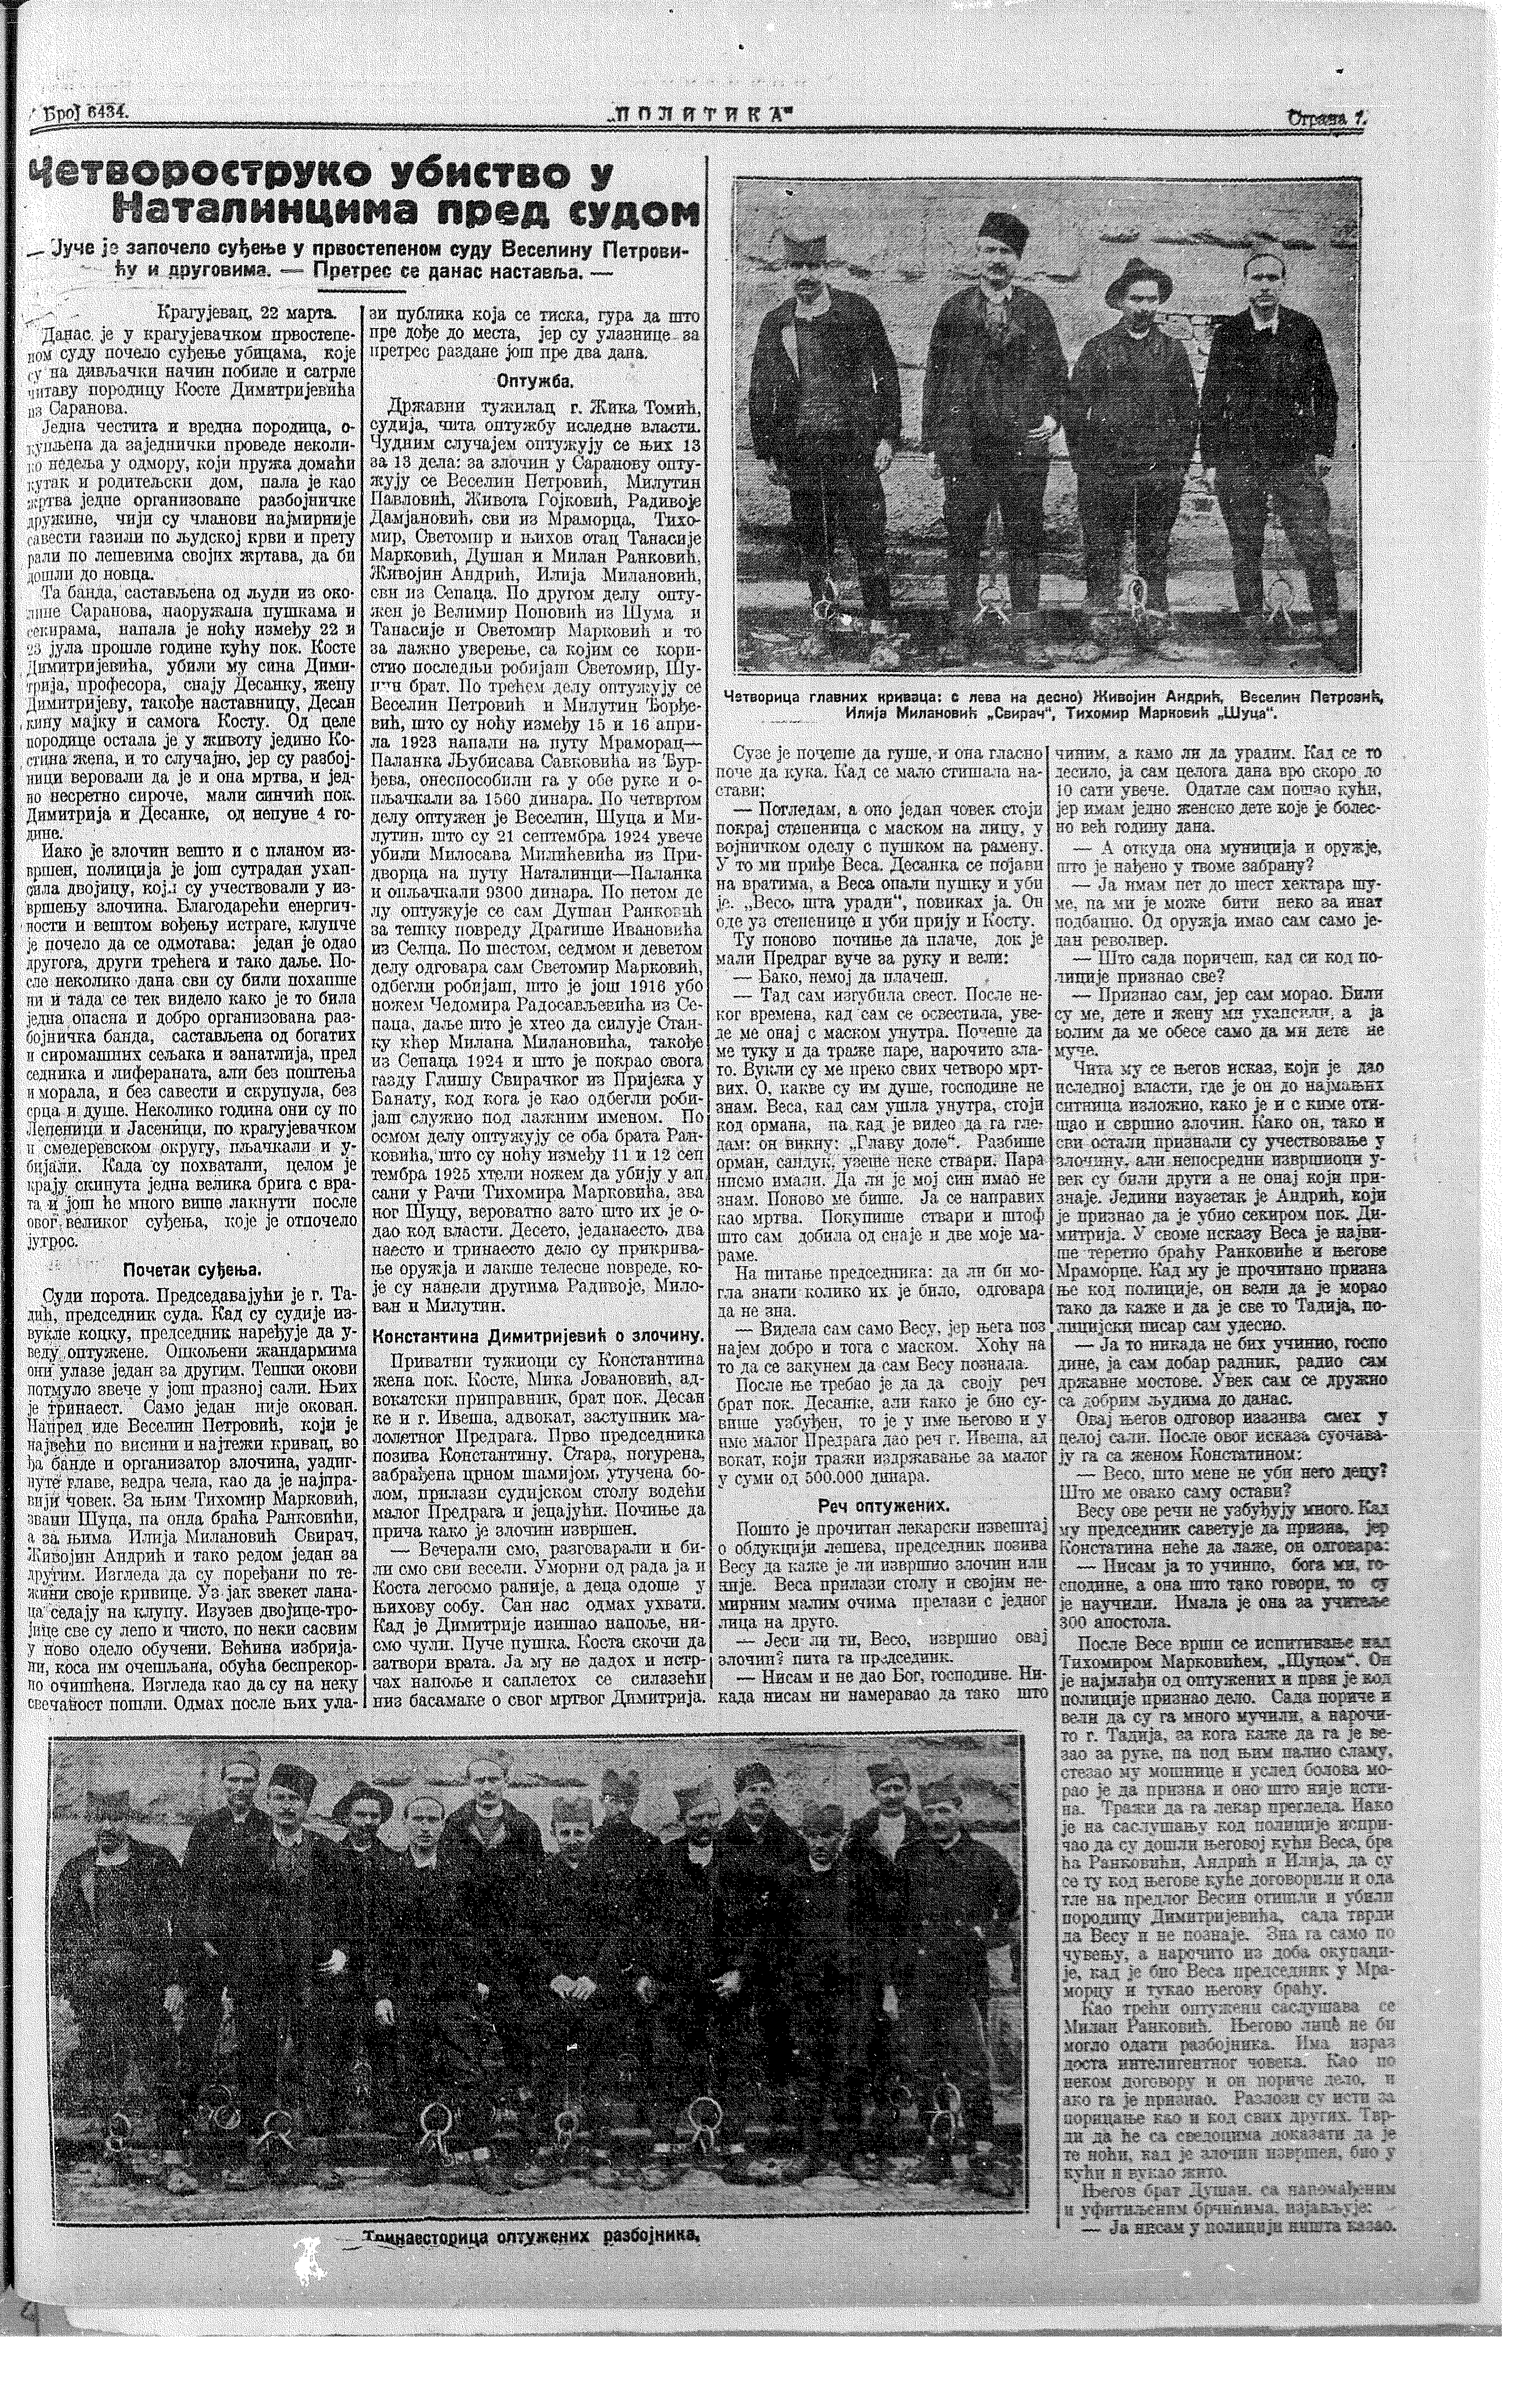 Četvorostruko ubistvo pred sudom, Politika, 23.03.1926.